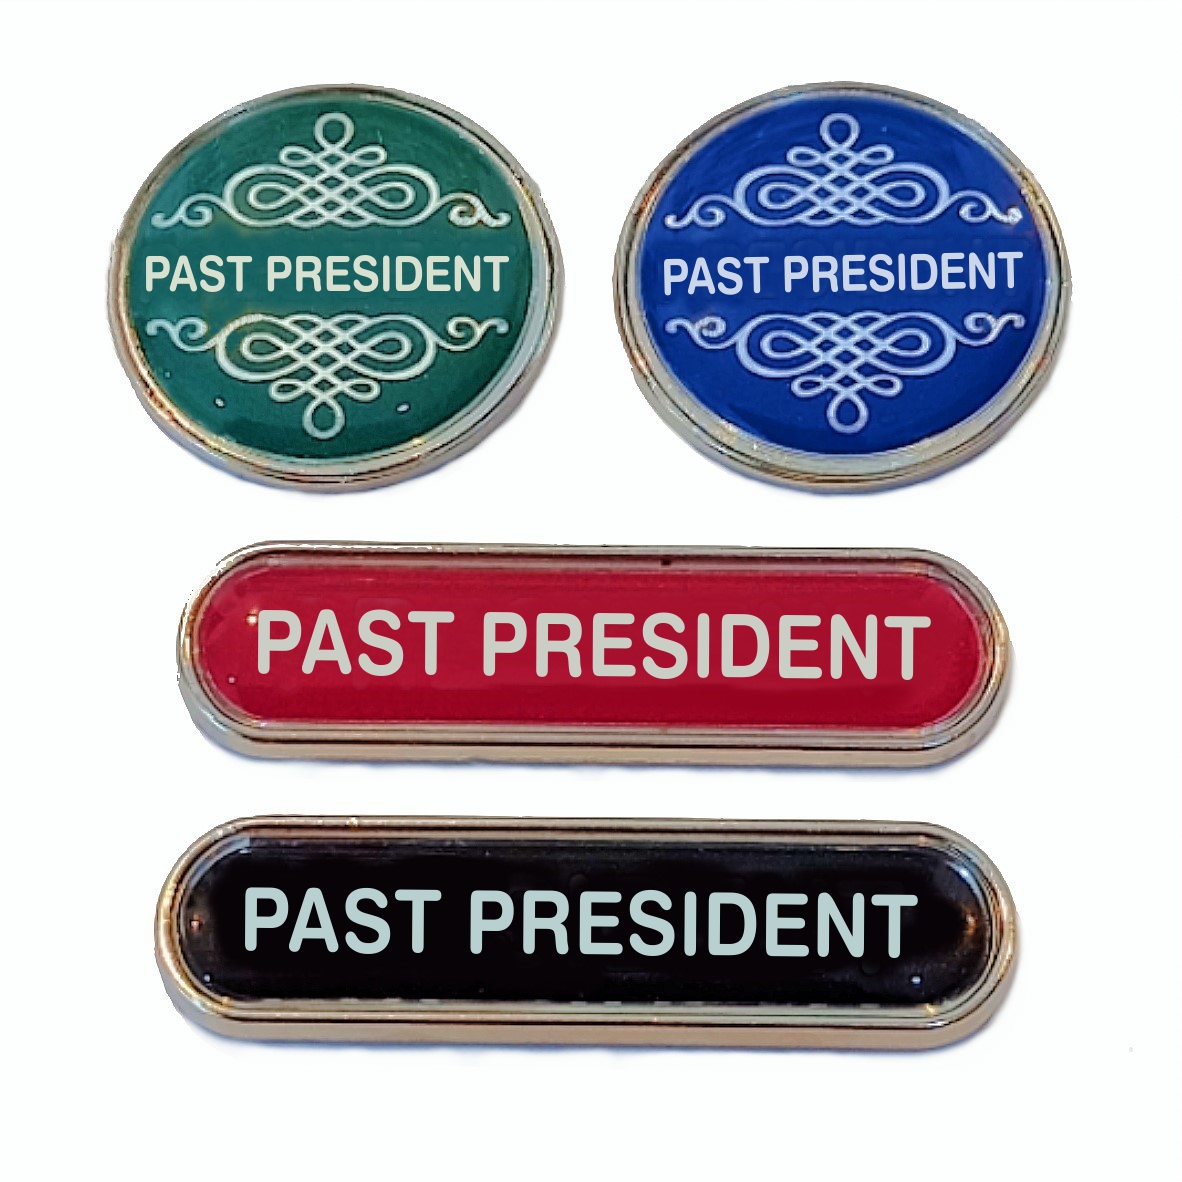 PAST PRESIDENT badge